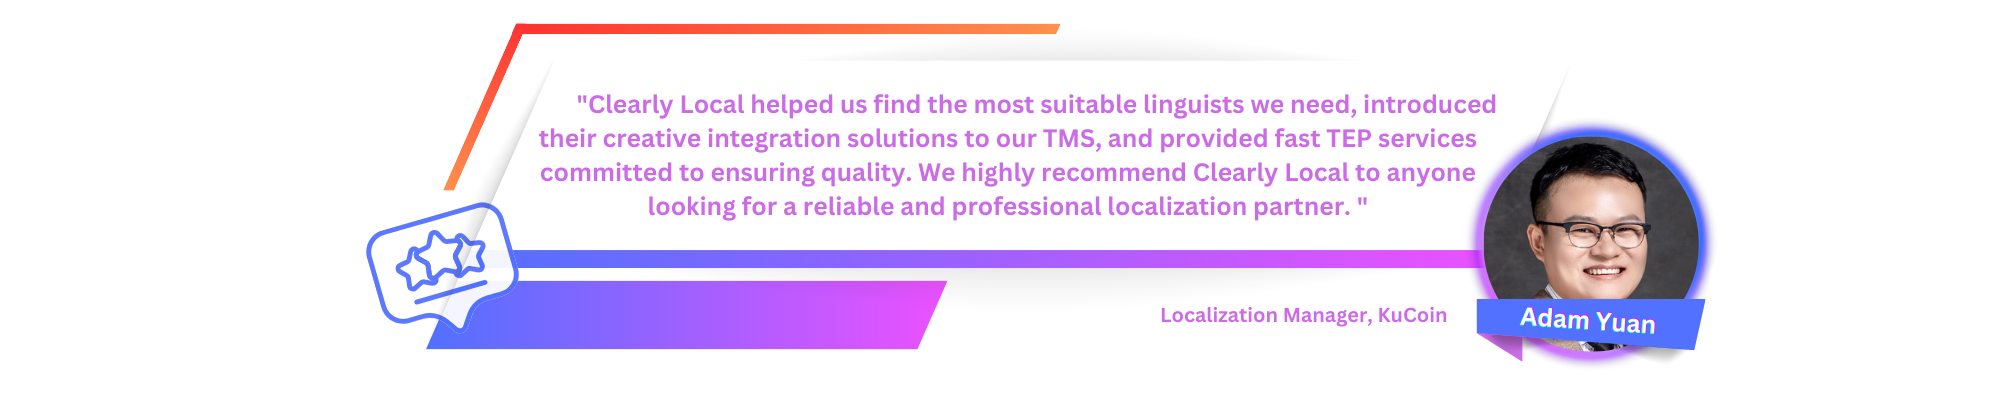 Clearly Local 帮助我们找到了最合适的语言学家，将他们的创造性集成解决方案引入我们的 TMS，并提供致力于确保质量的快速 TEP 服务。我们强烈向任何正在寻找可靠且专业的本地化合作伙伴的人推荐 Clearly Local。 